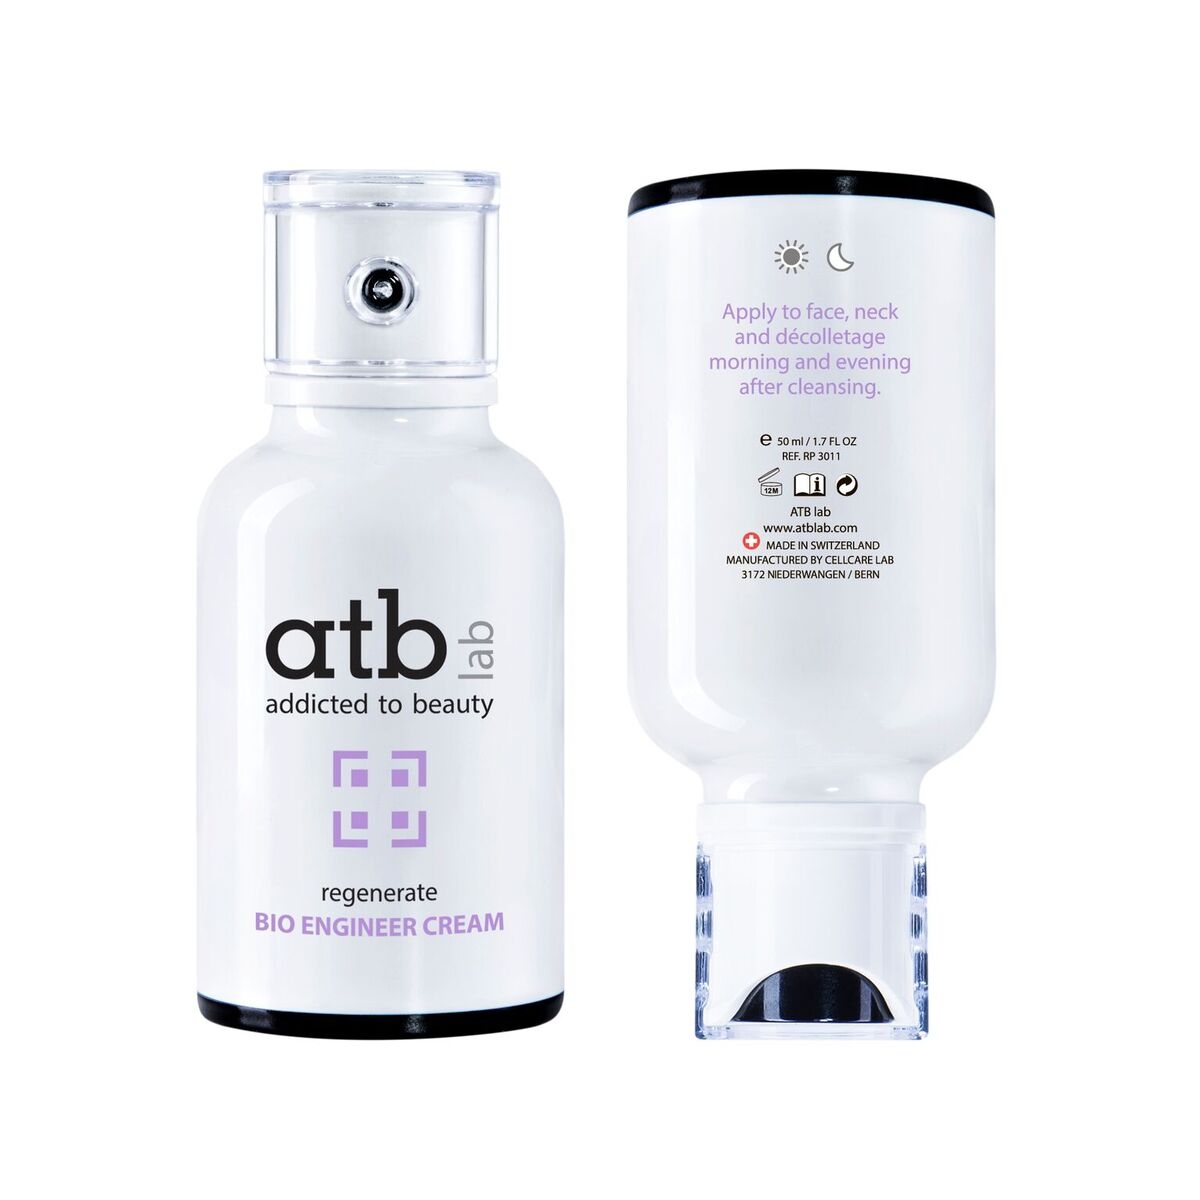 Крем skin clean. ATB крем "био-инженер",50 мл. Швейцарская косметика ATB. ATB крем. ATB Lab косметика крем для глаз.